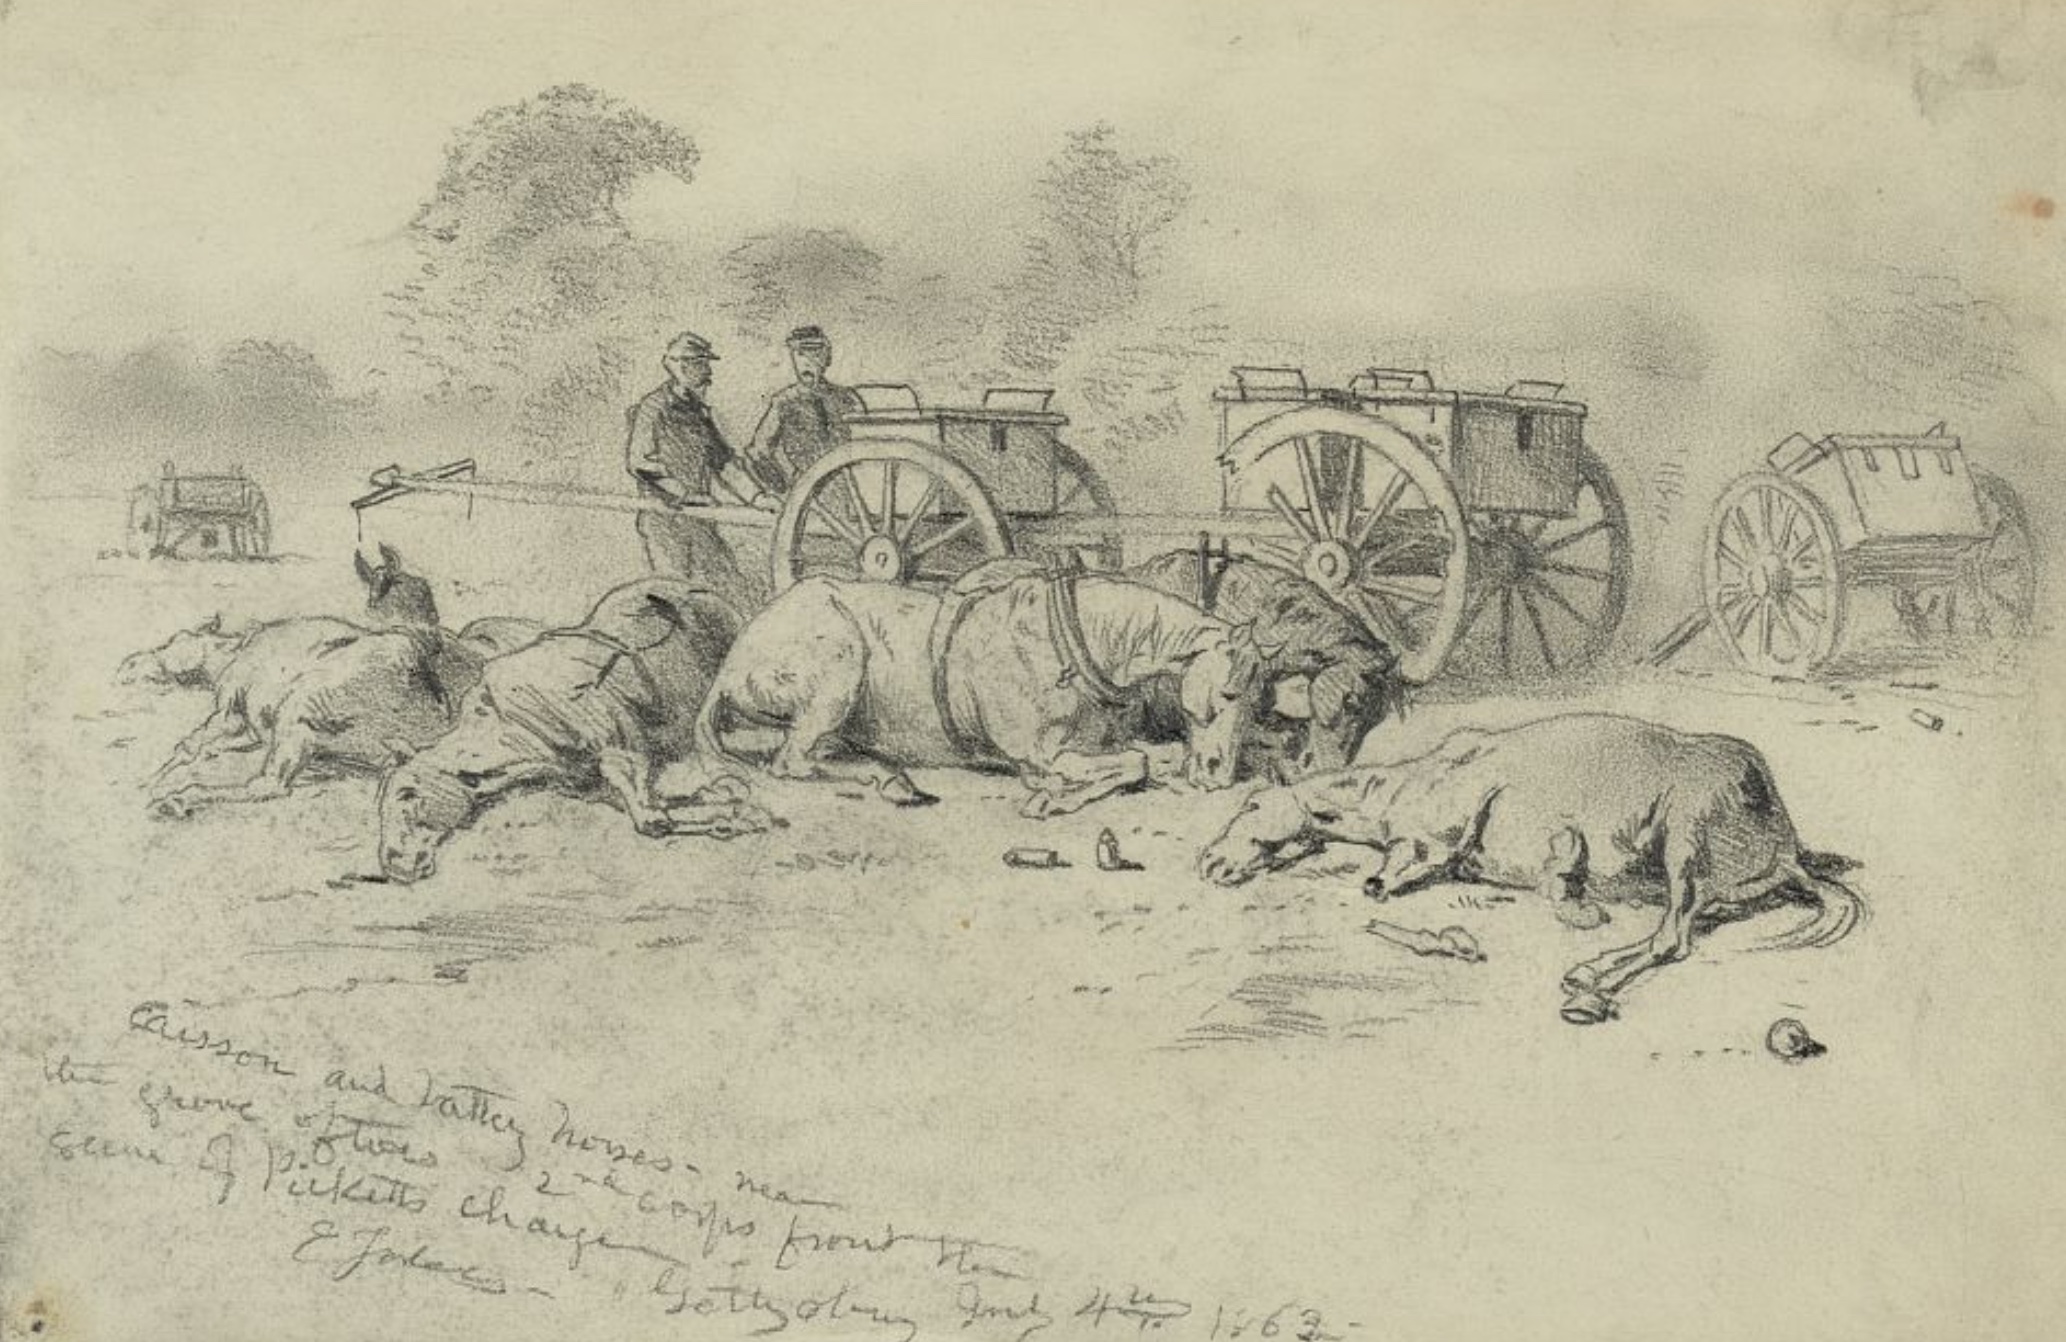 Dead horses at Gettysburg